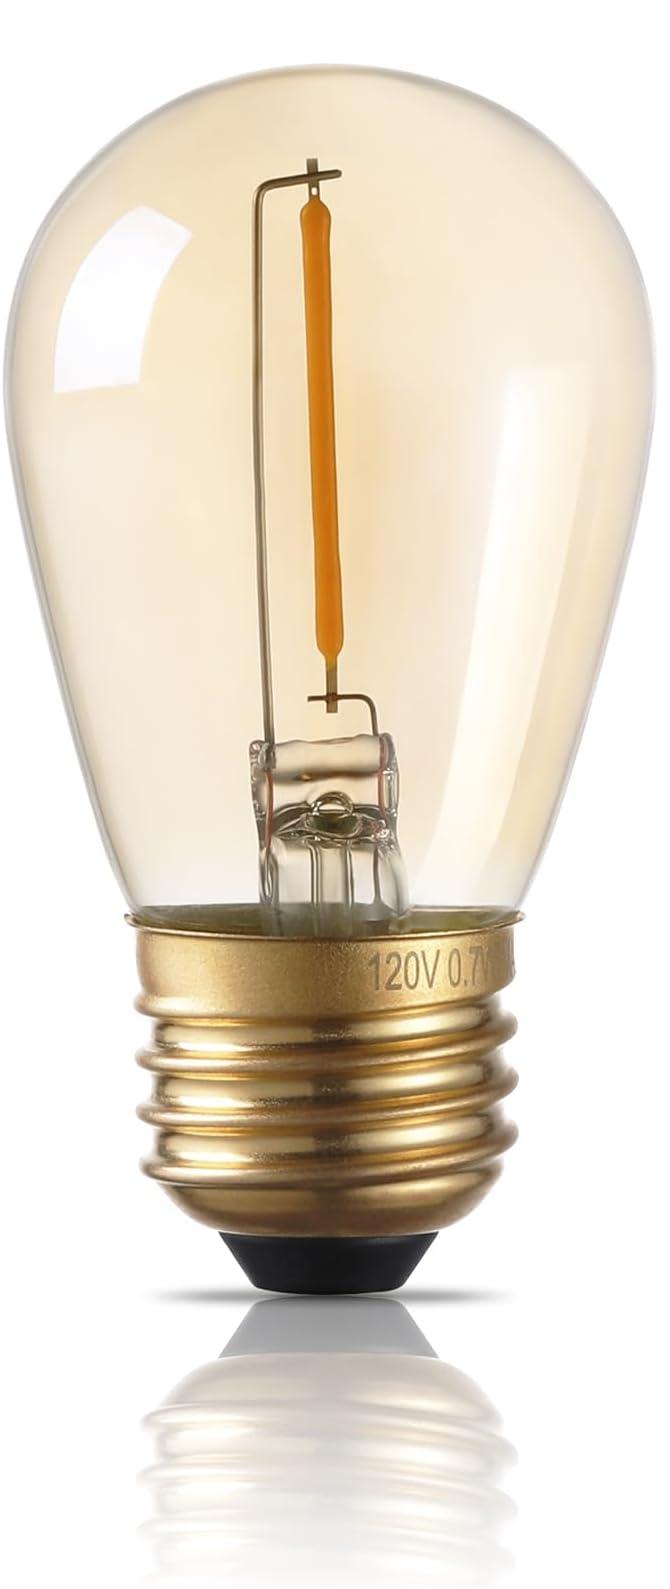 TORCHSTAR® S14A 0.7W E26 LED Bulb